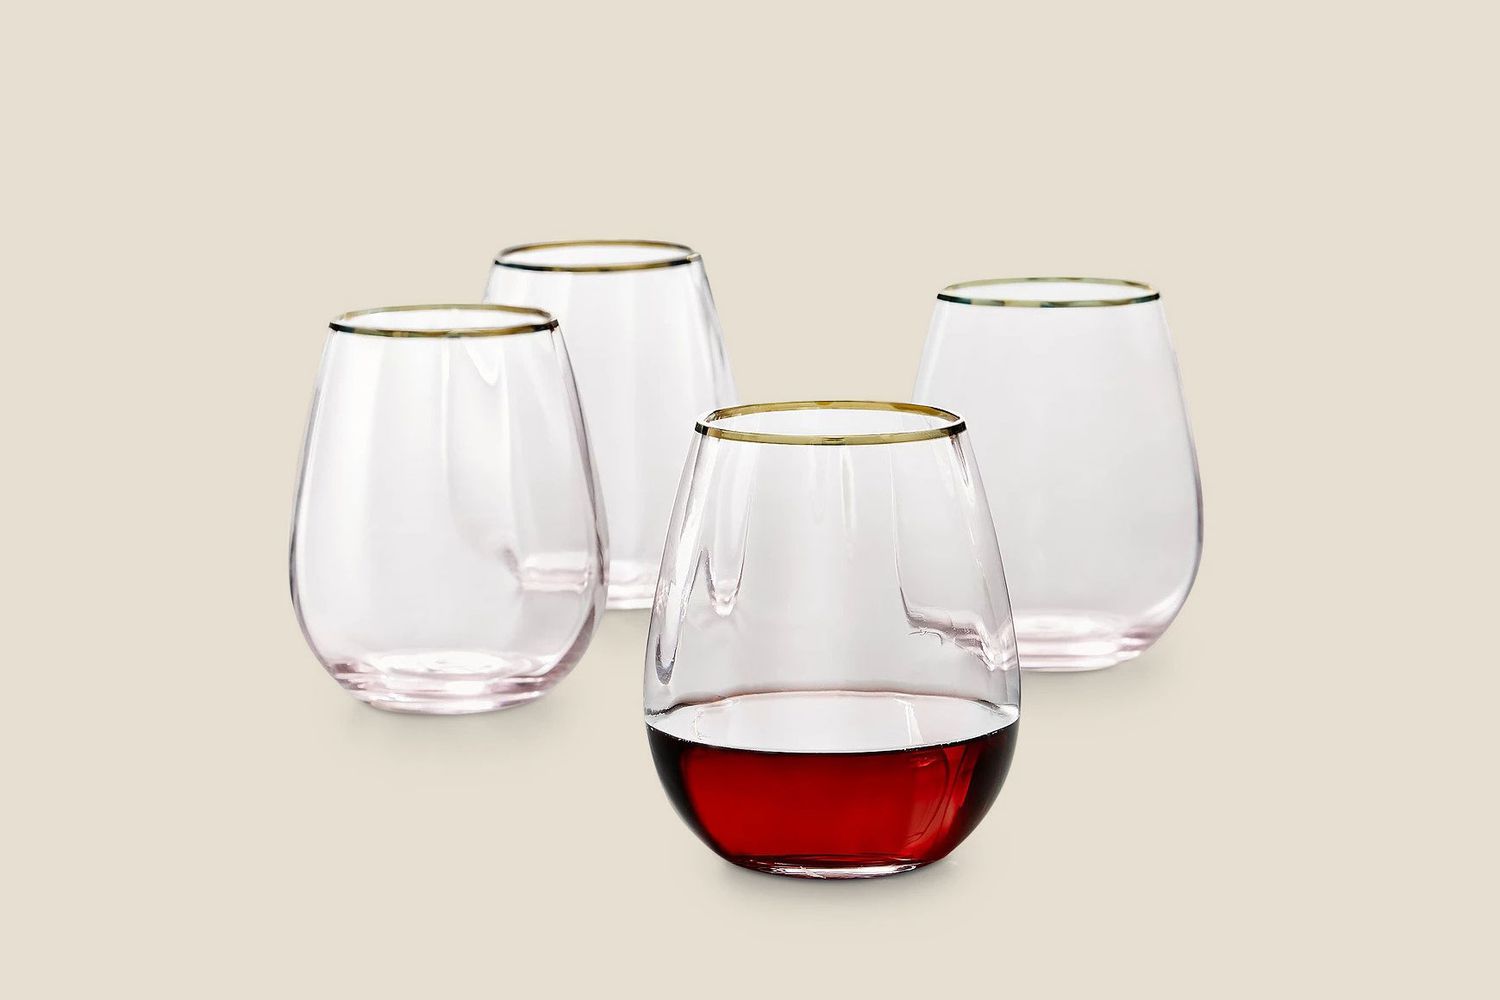 Martha Stewart Collection "Blush Optic" Stemless Wine Glasses